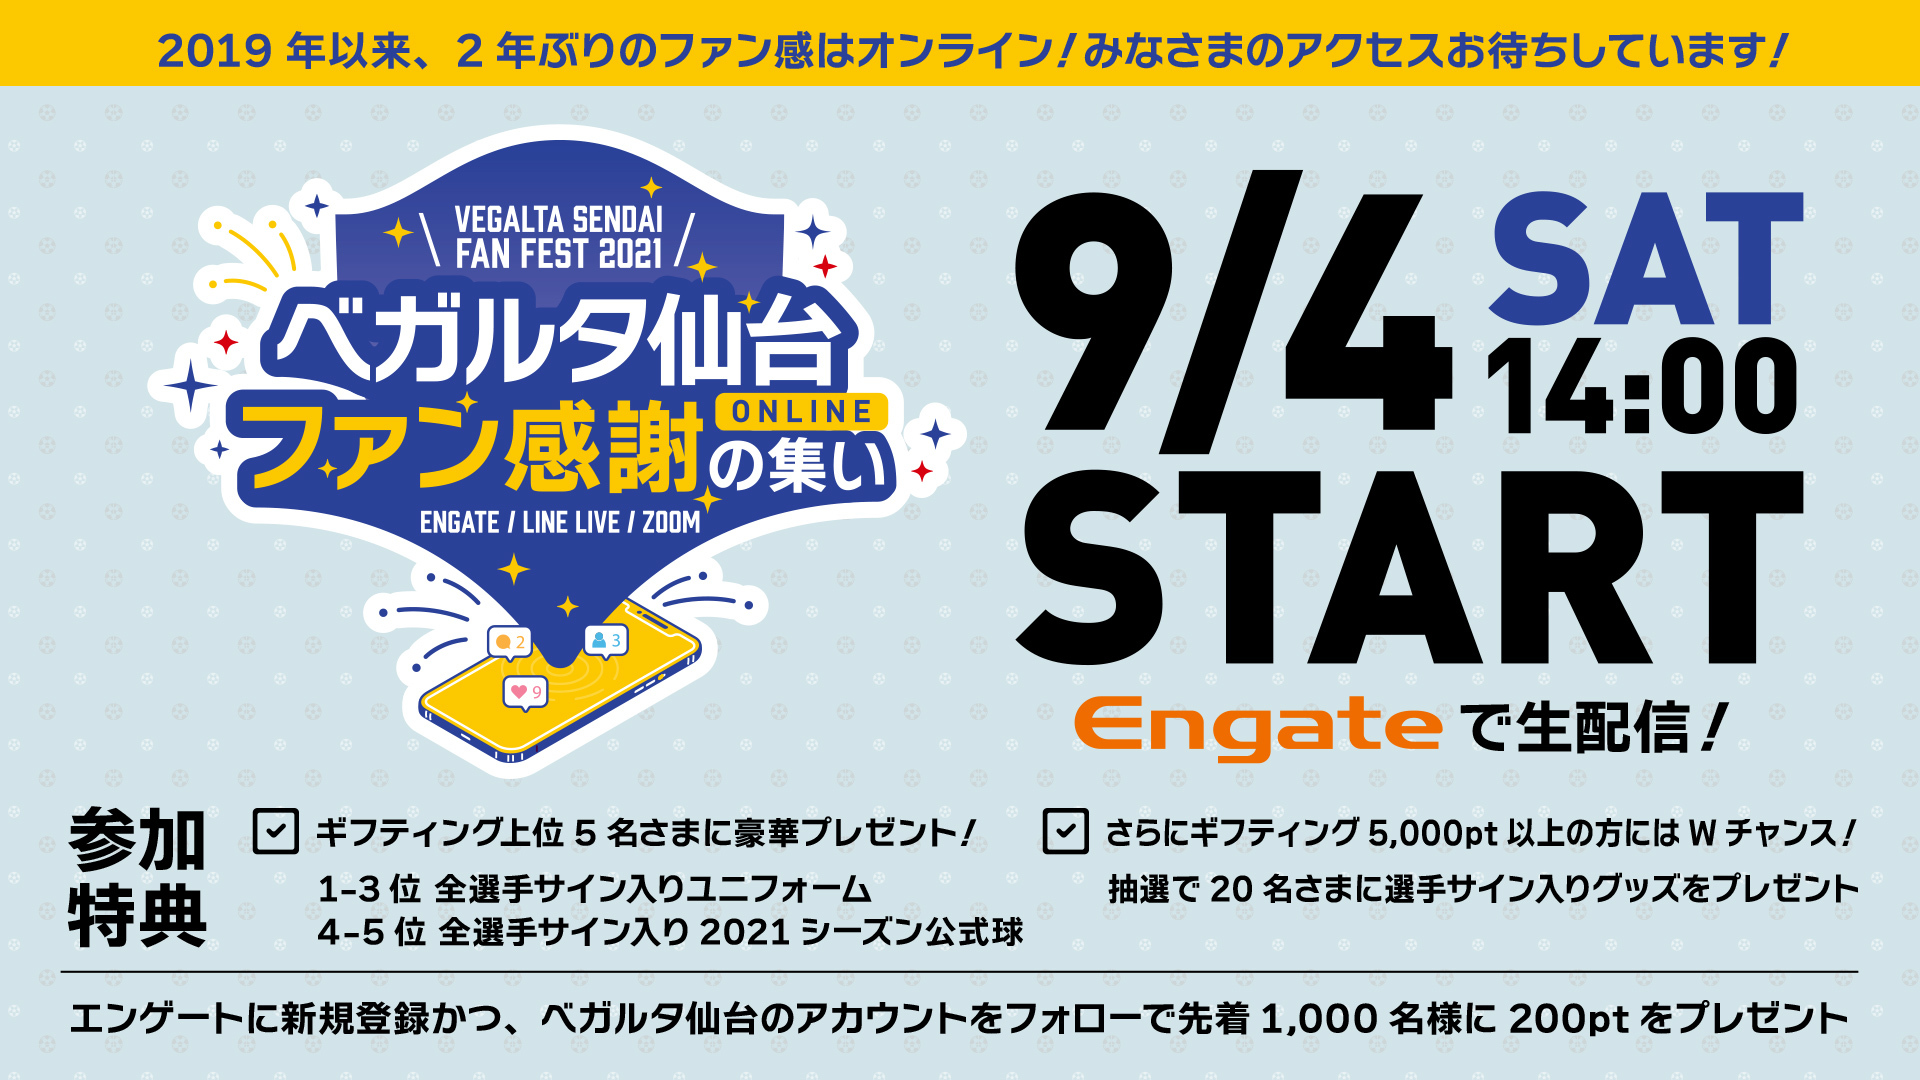 Engate エンゲート 日本最大級のスポーツ特化型ギフティングサービス